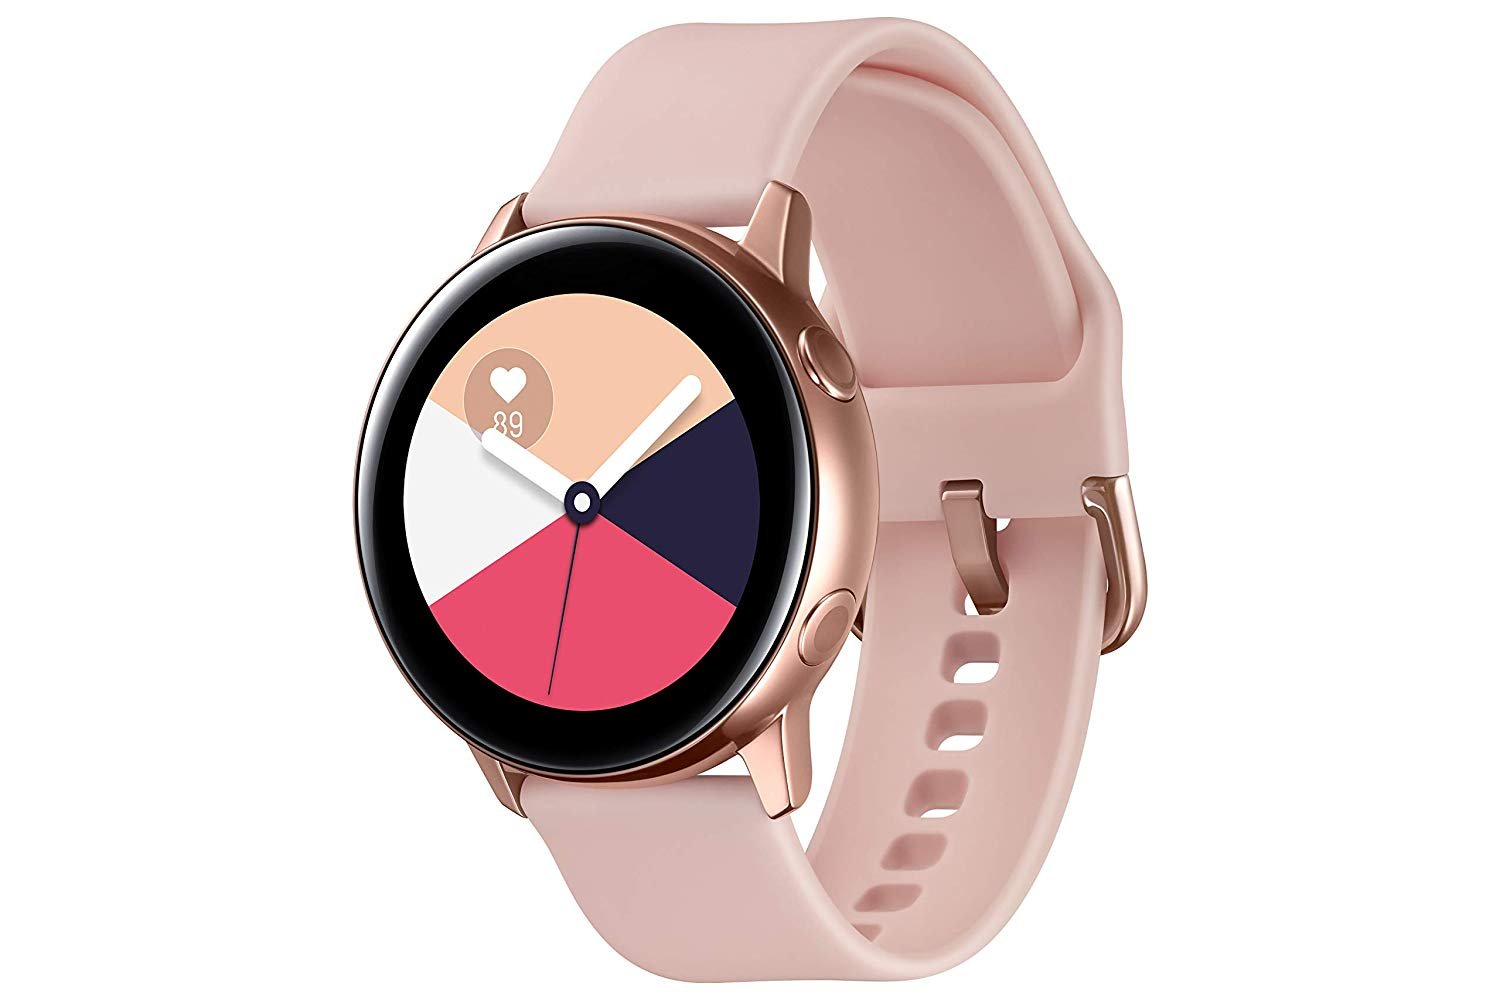 Samsung Smart Watches for Women